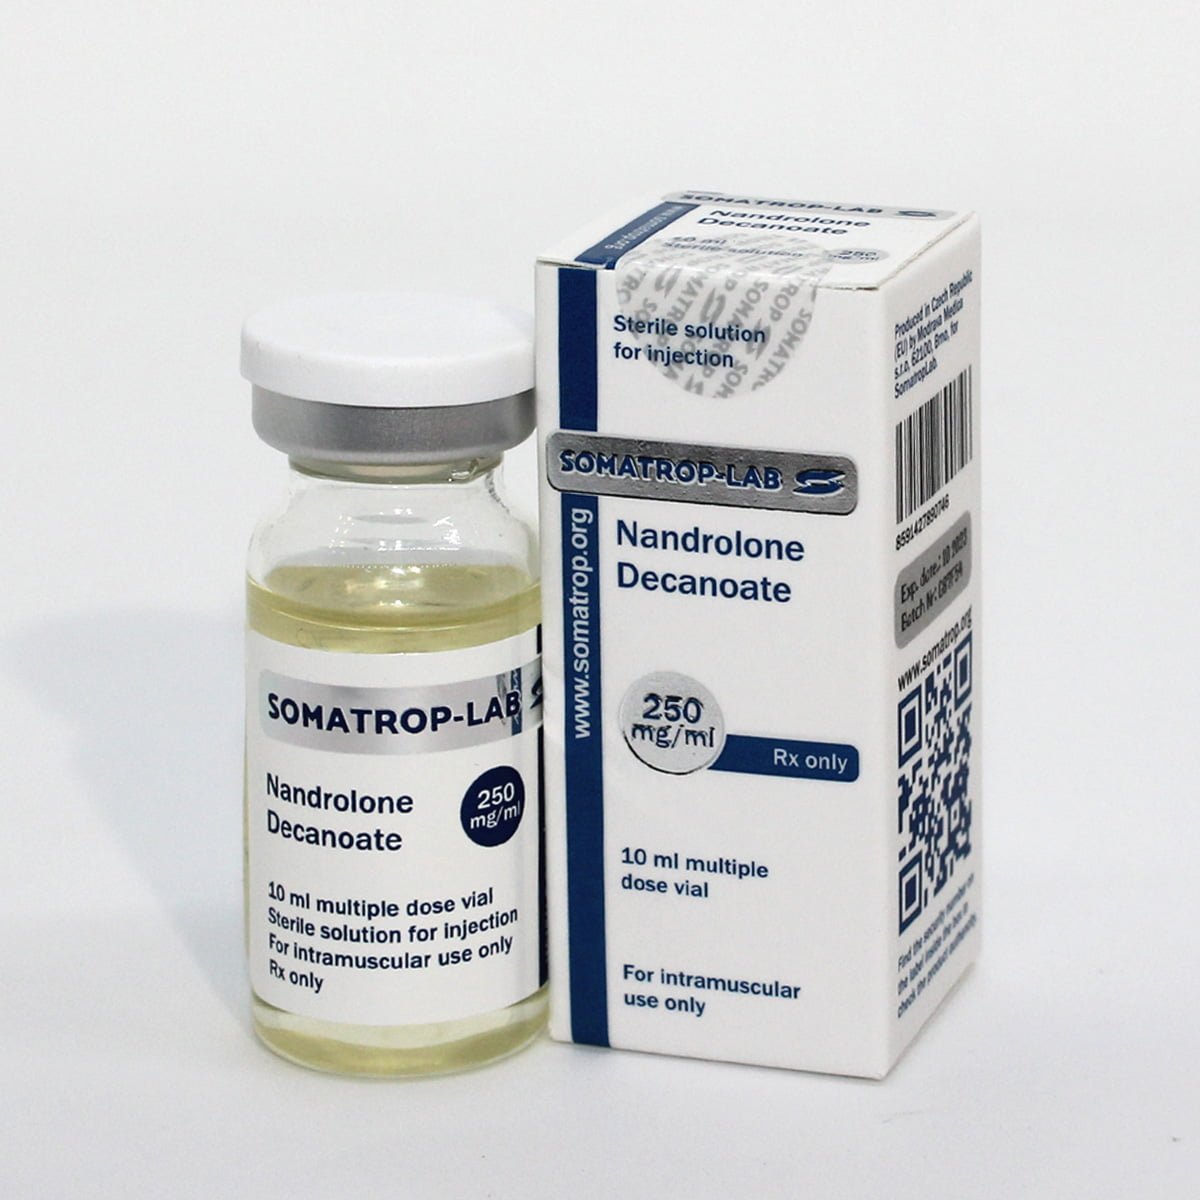 Somatrop-Lab Nandrolone Decanoate